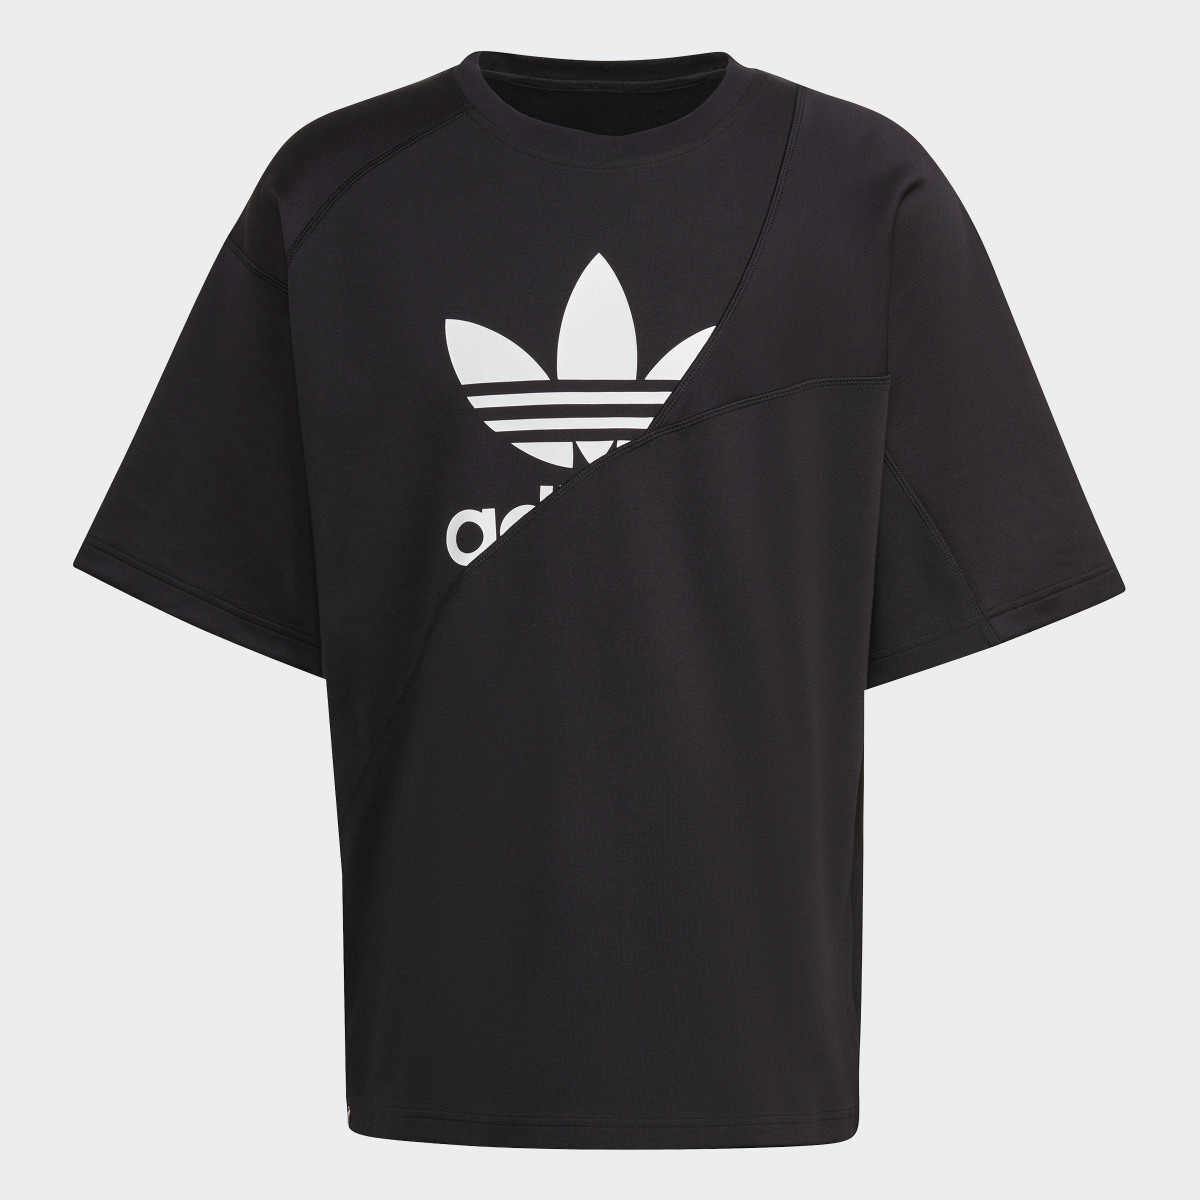 Adidas Adicolor Tricot Interlock T-Shirt. 5